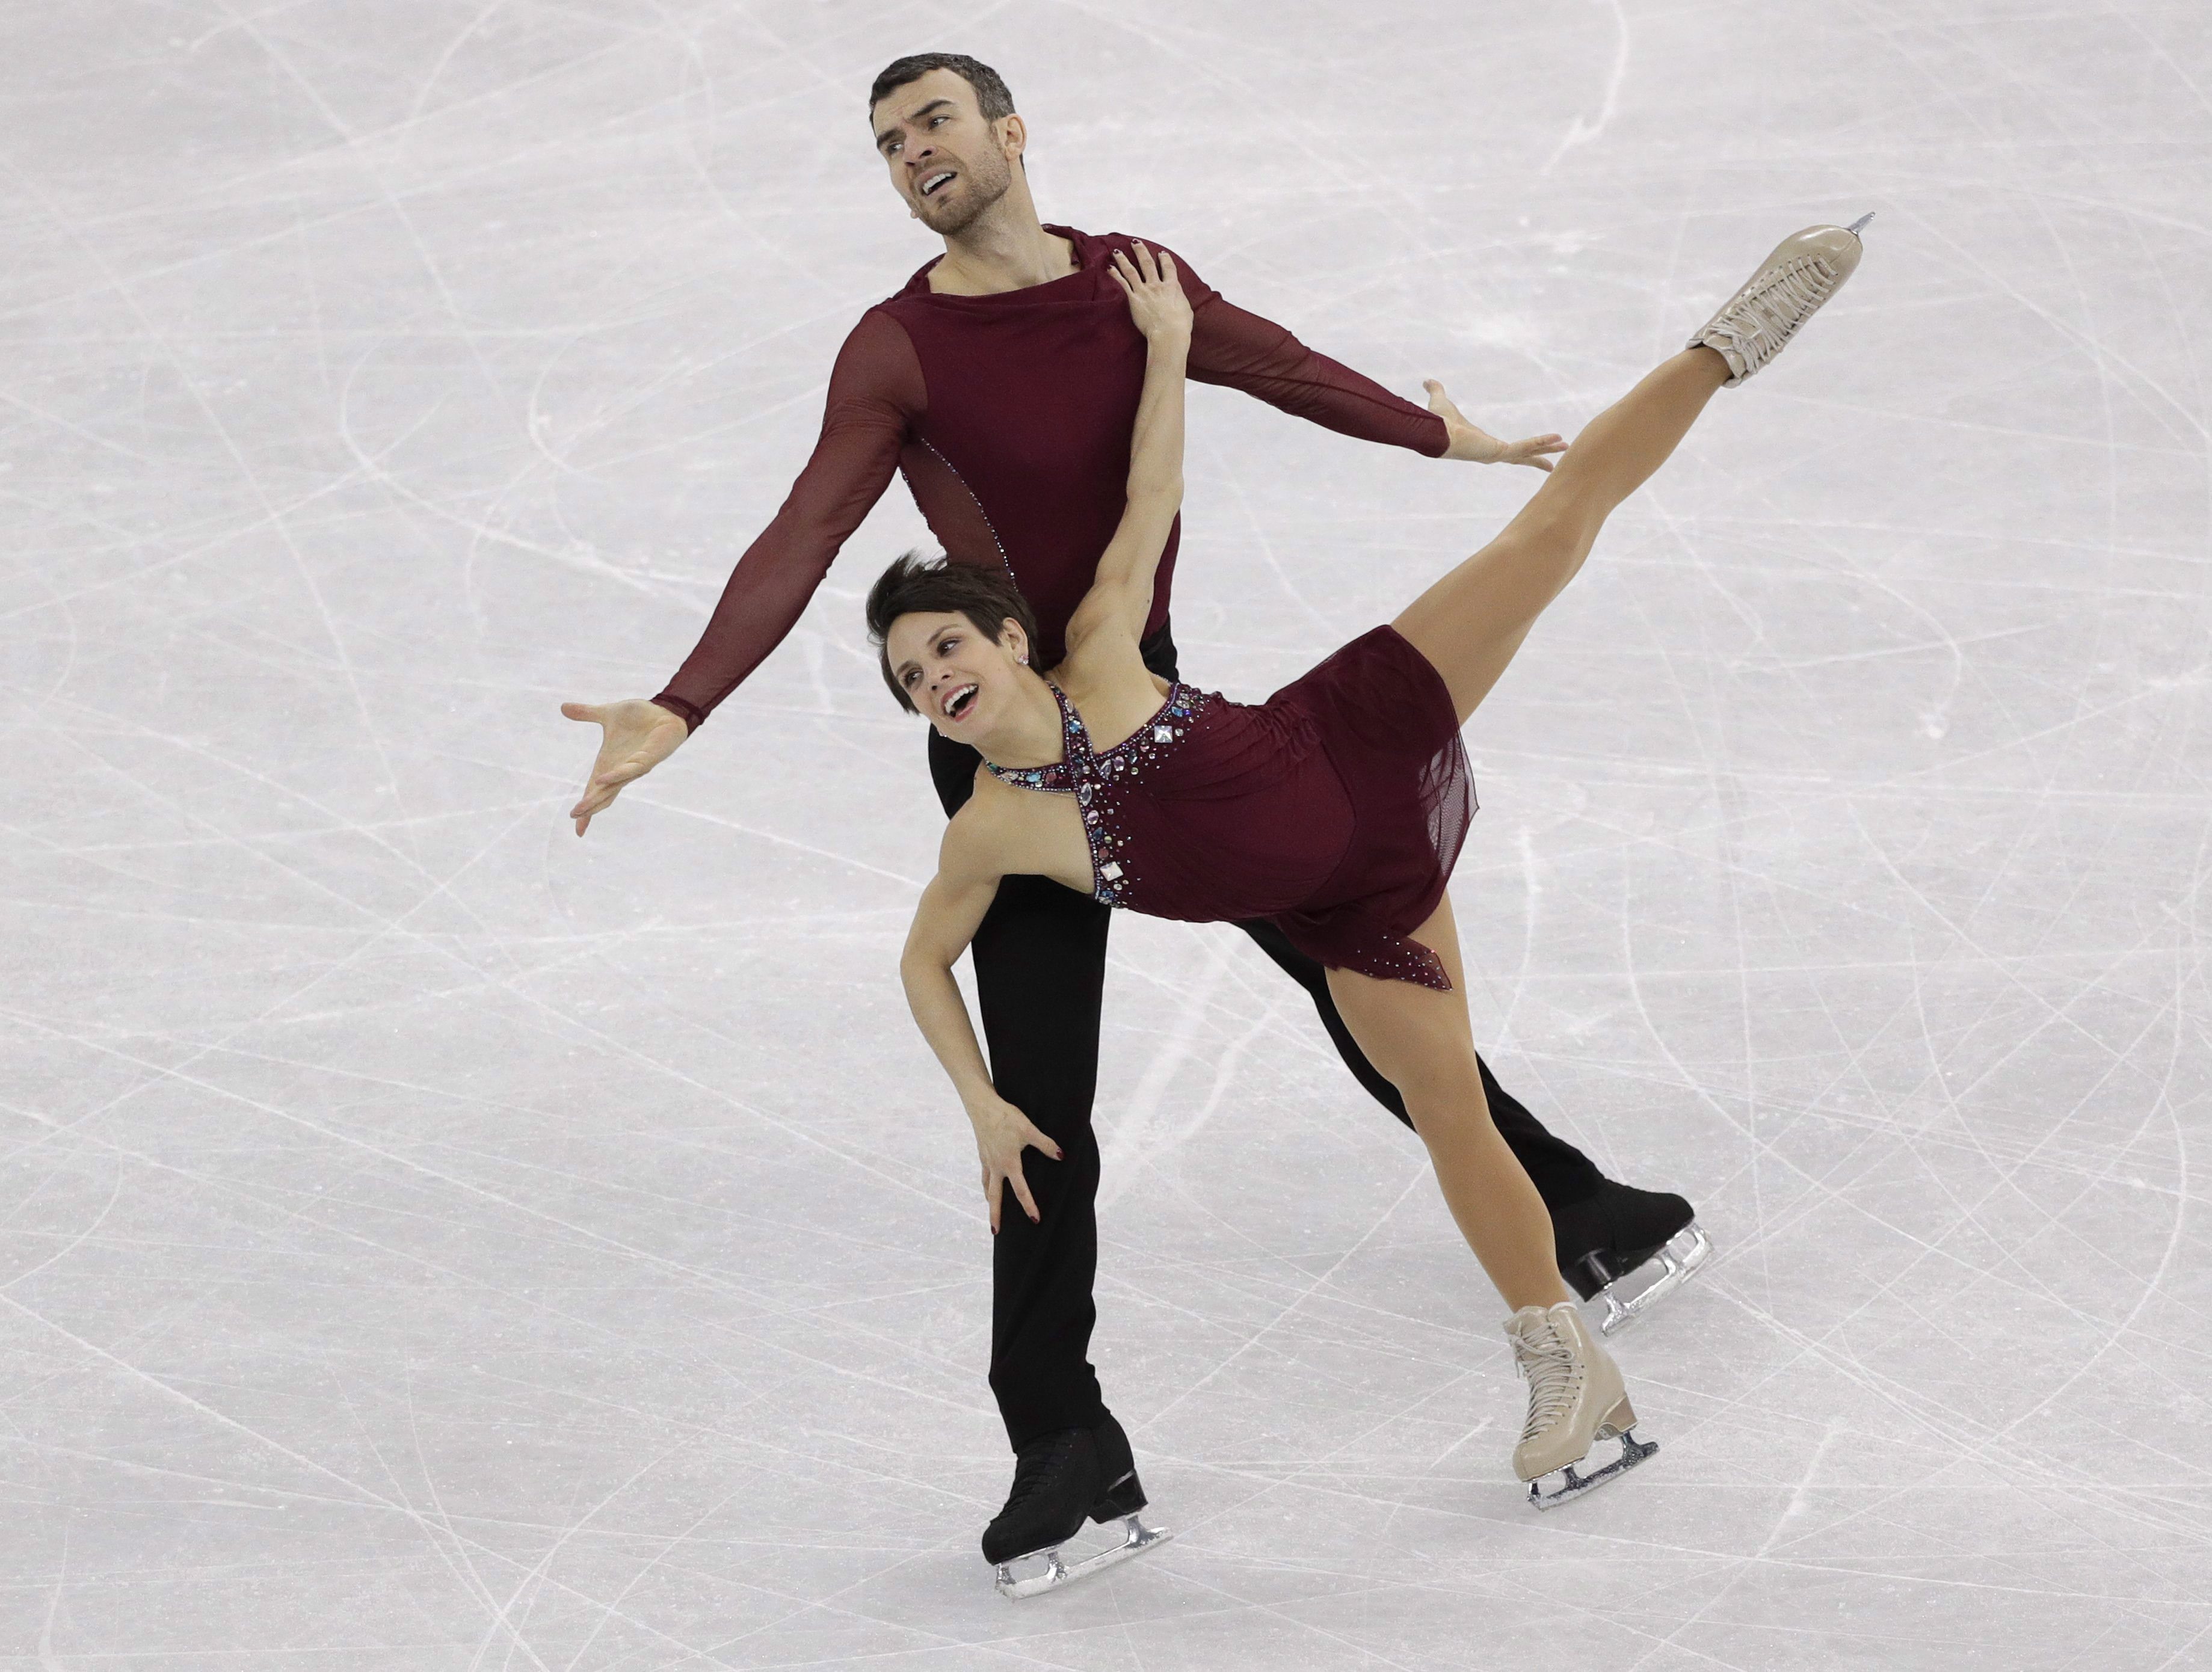 Meagan Duhamel and Eric Radford performing at 2018 Winter Olympics.